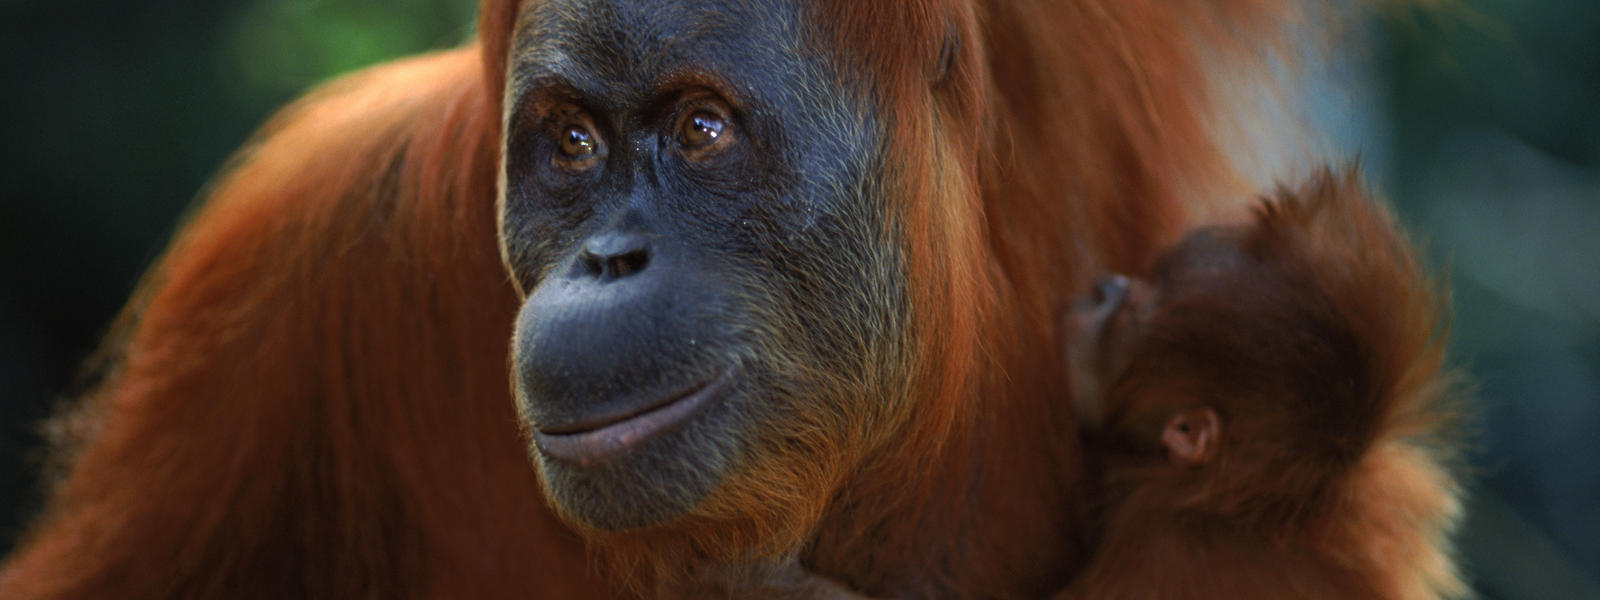 Help cant do my essay analysis of the orangutan pongo pygmaeus